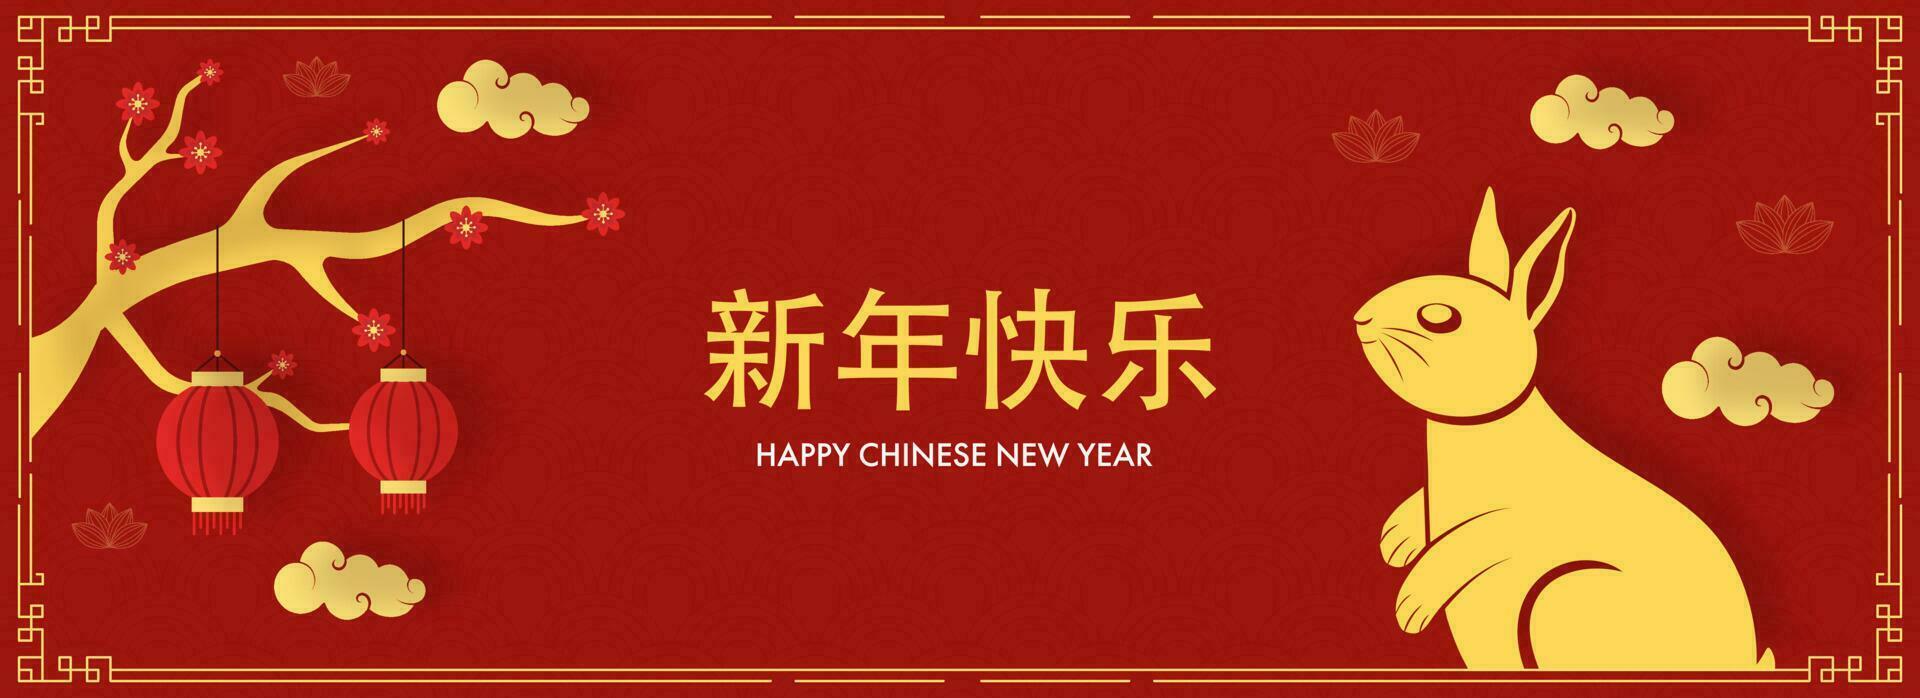 contento chino nuevo año mandarín texto con linda conejo, linternas colgar, sakura rama en quemado rojo semi circulo modelo antecedentes. vector